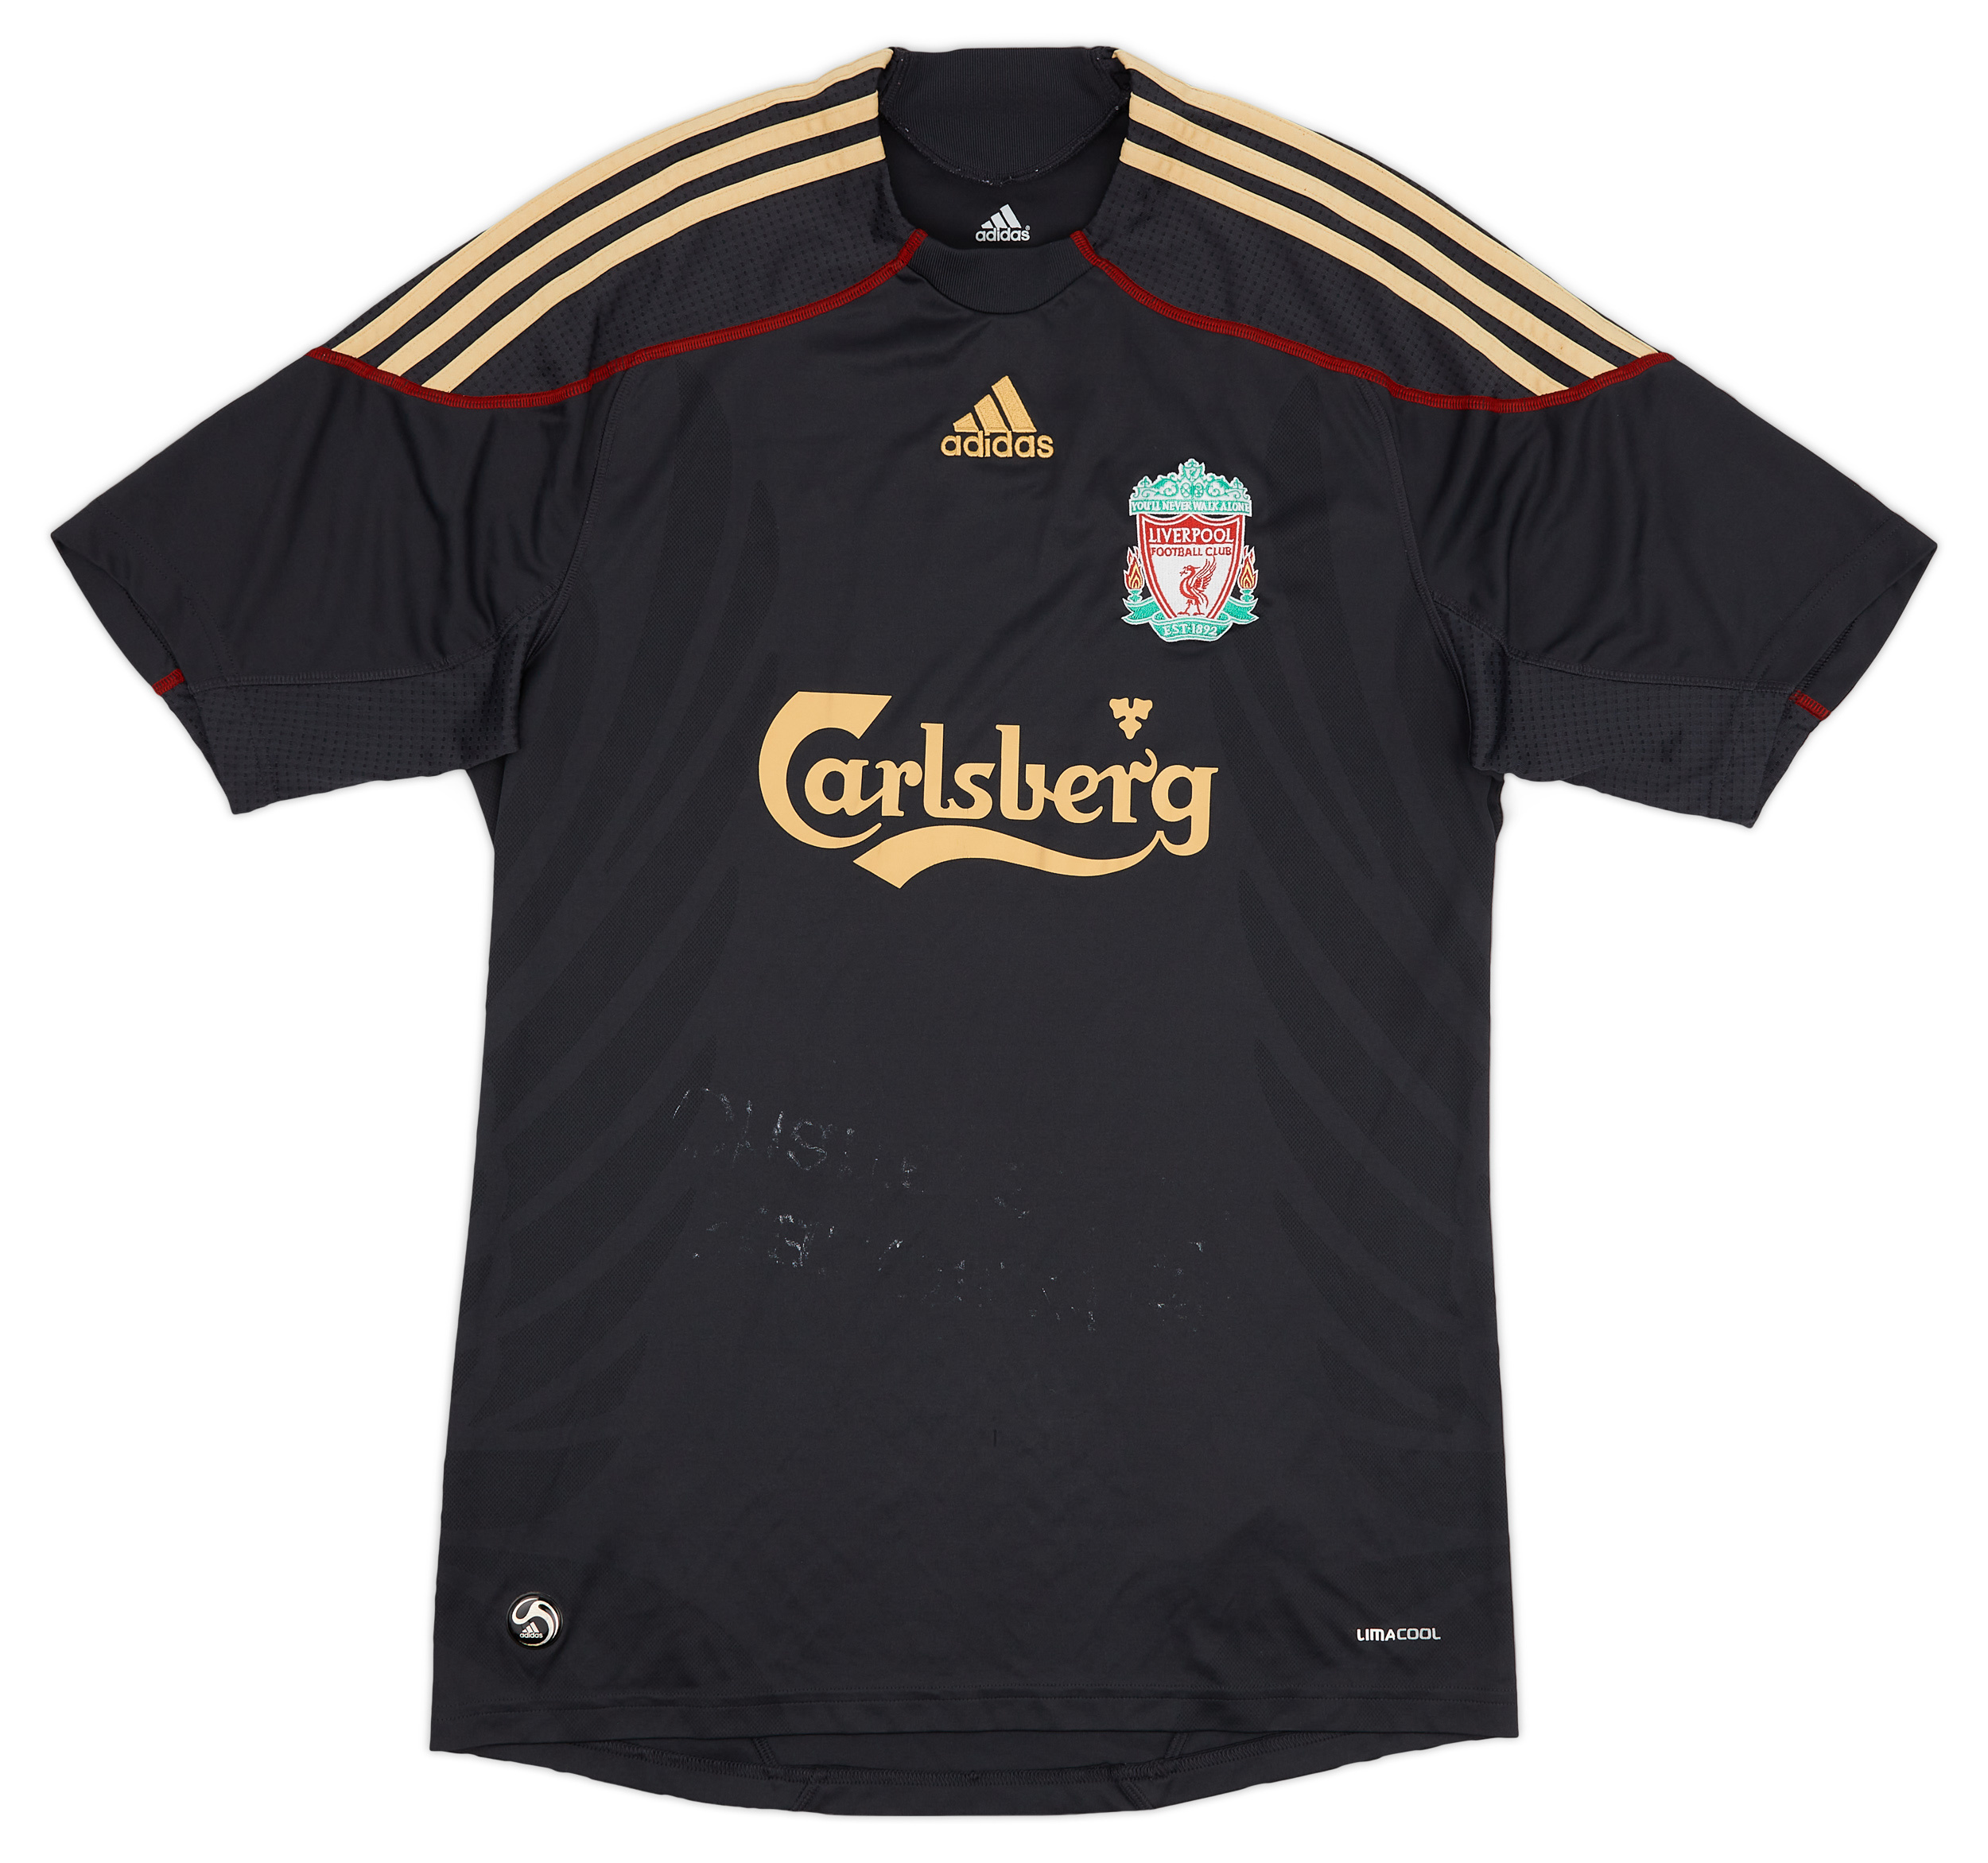 2009-10 Liverpool Away Shirt - 5/10 - ()